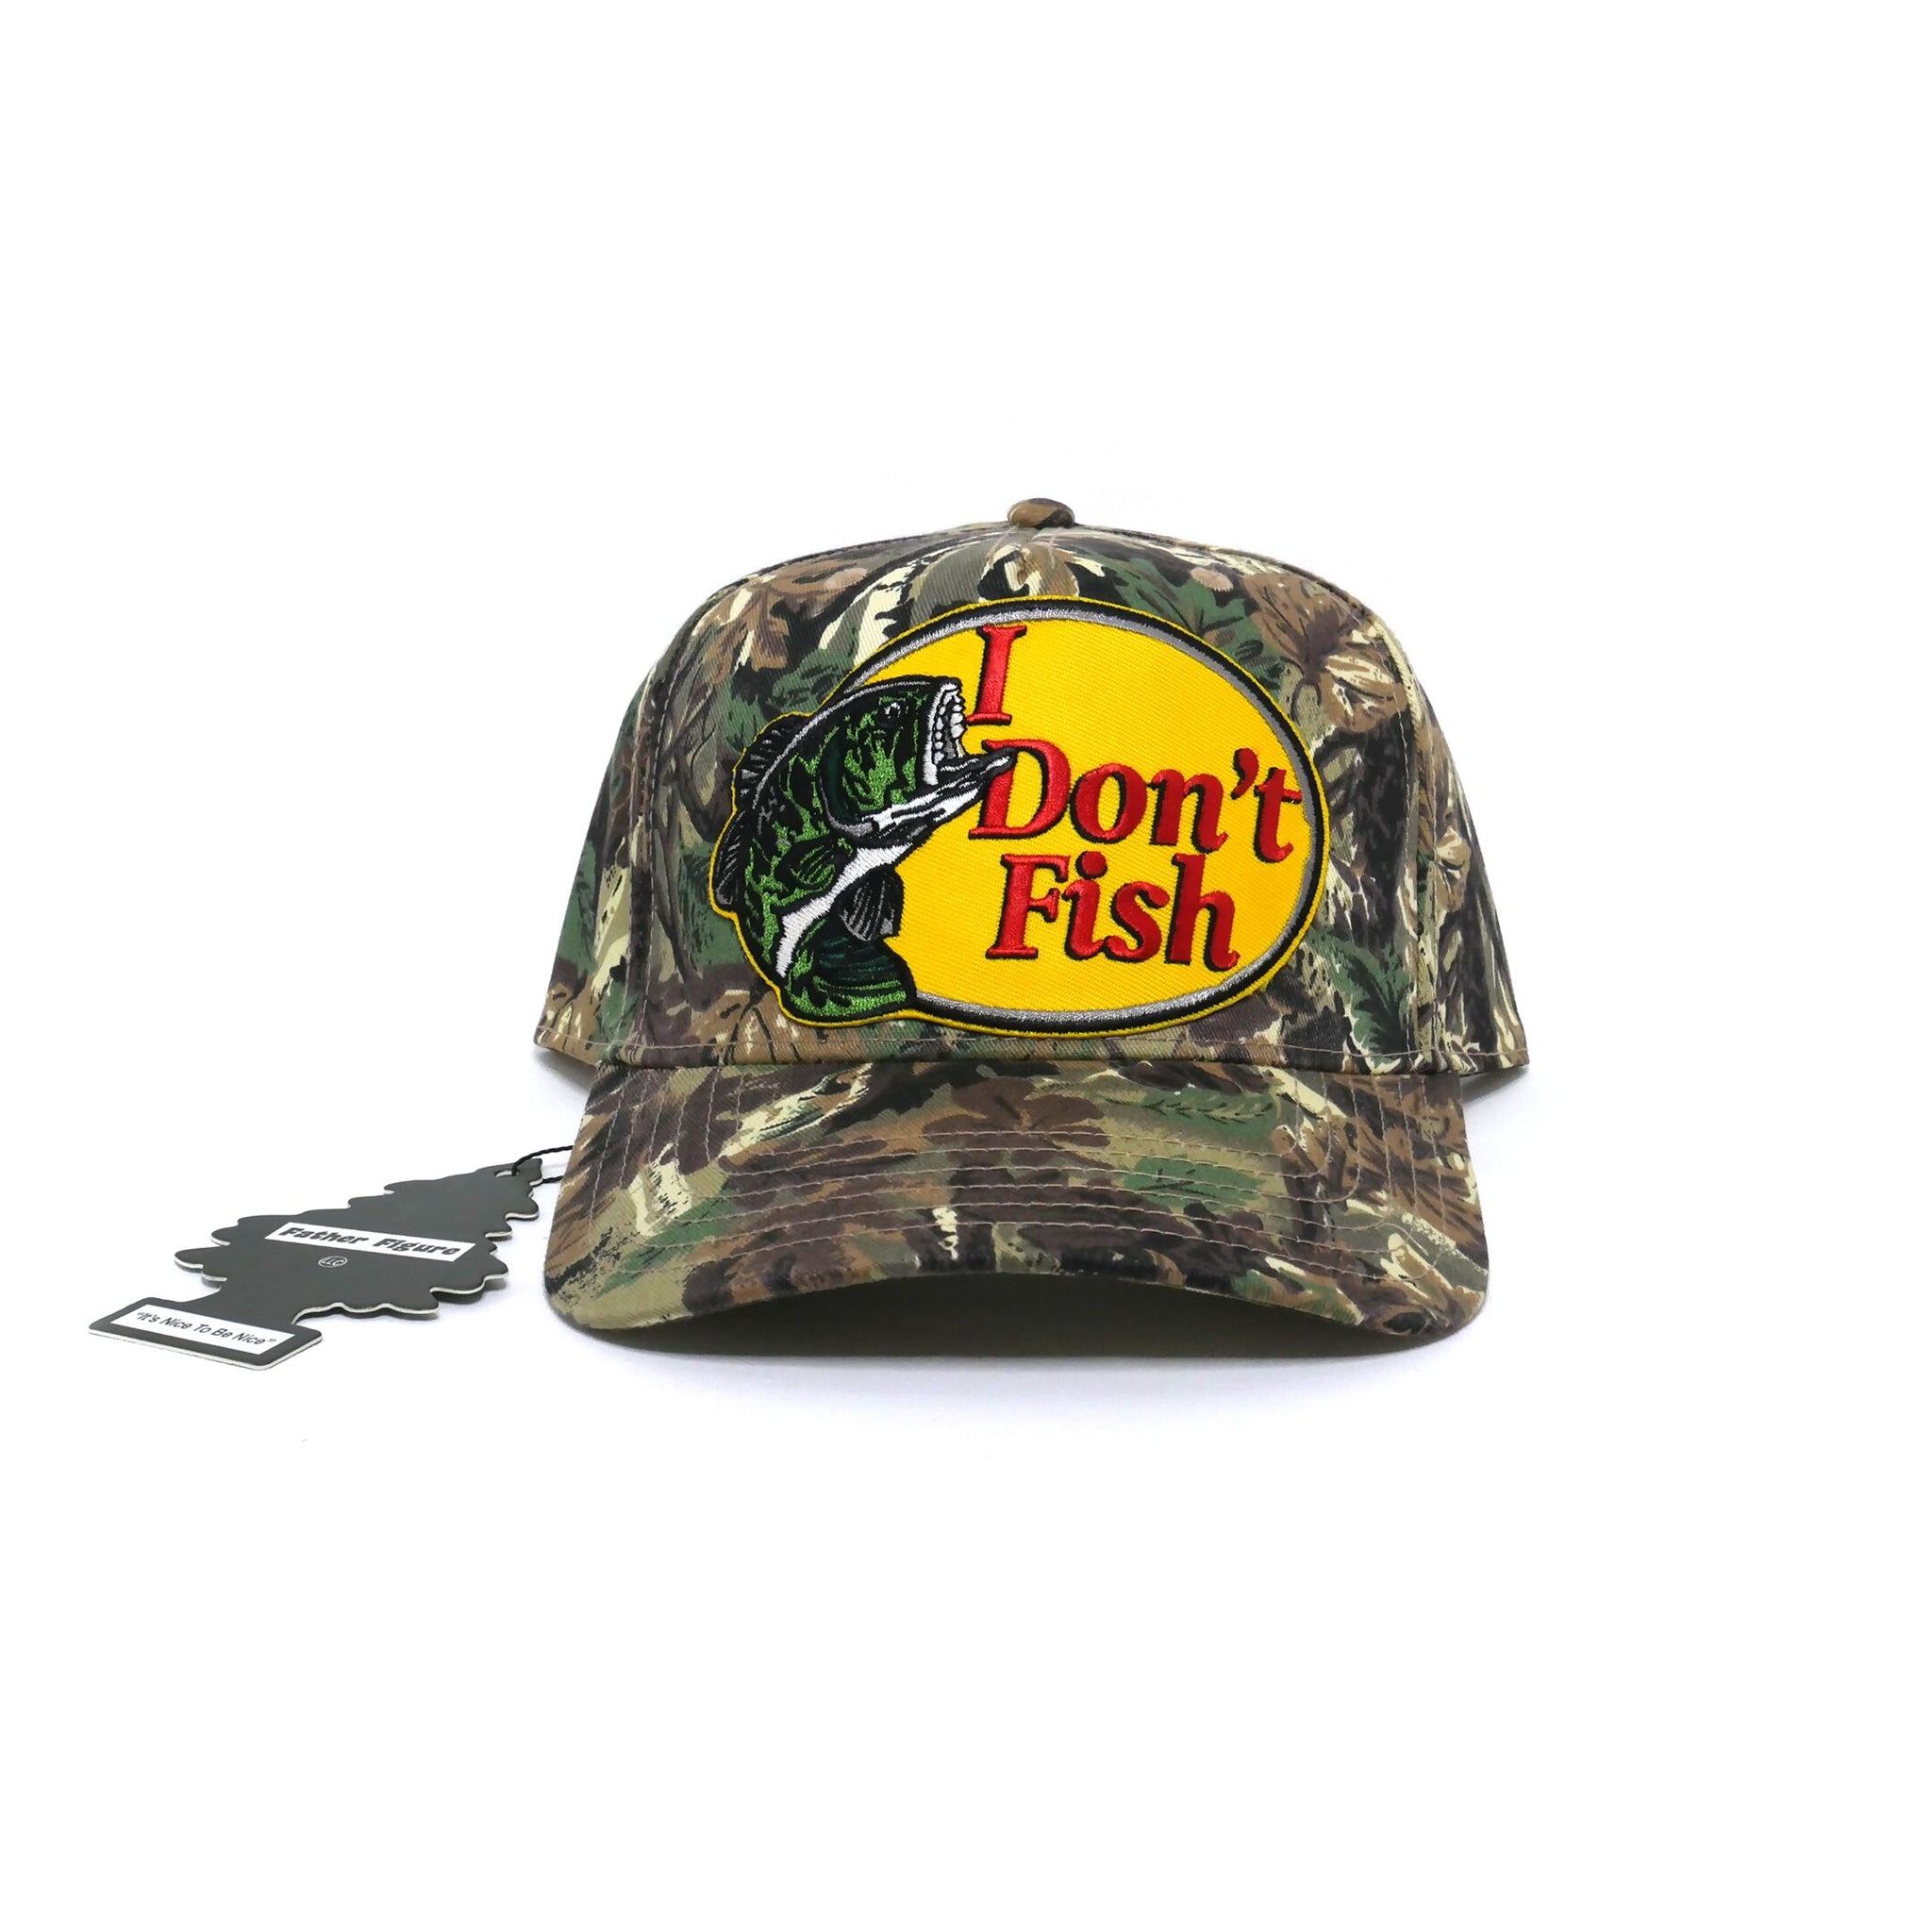 "I Don't Fish" Bass Pro Parody Hat